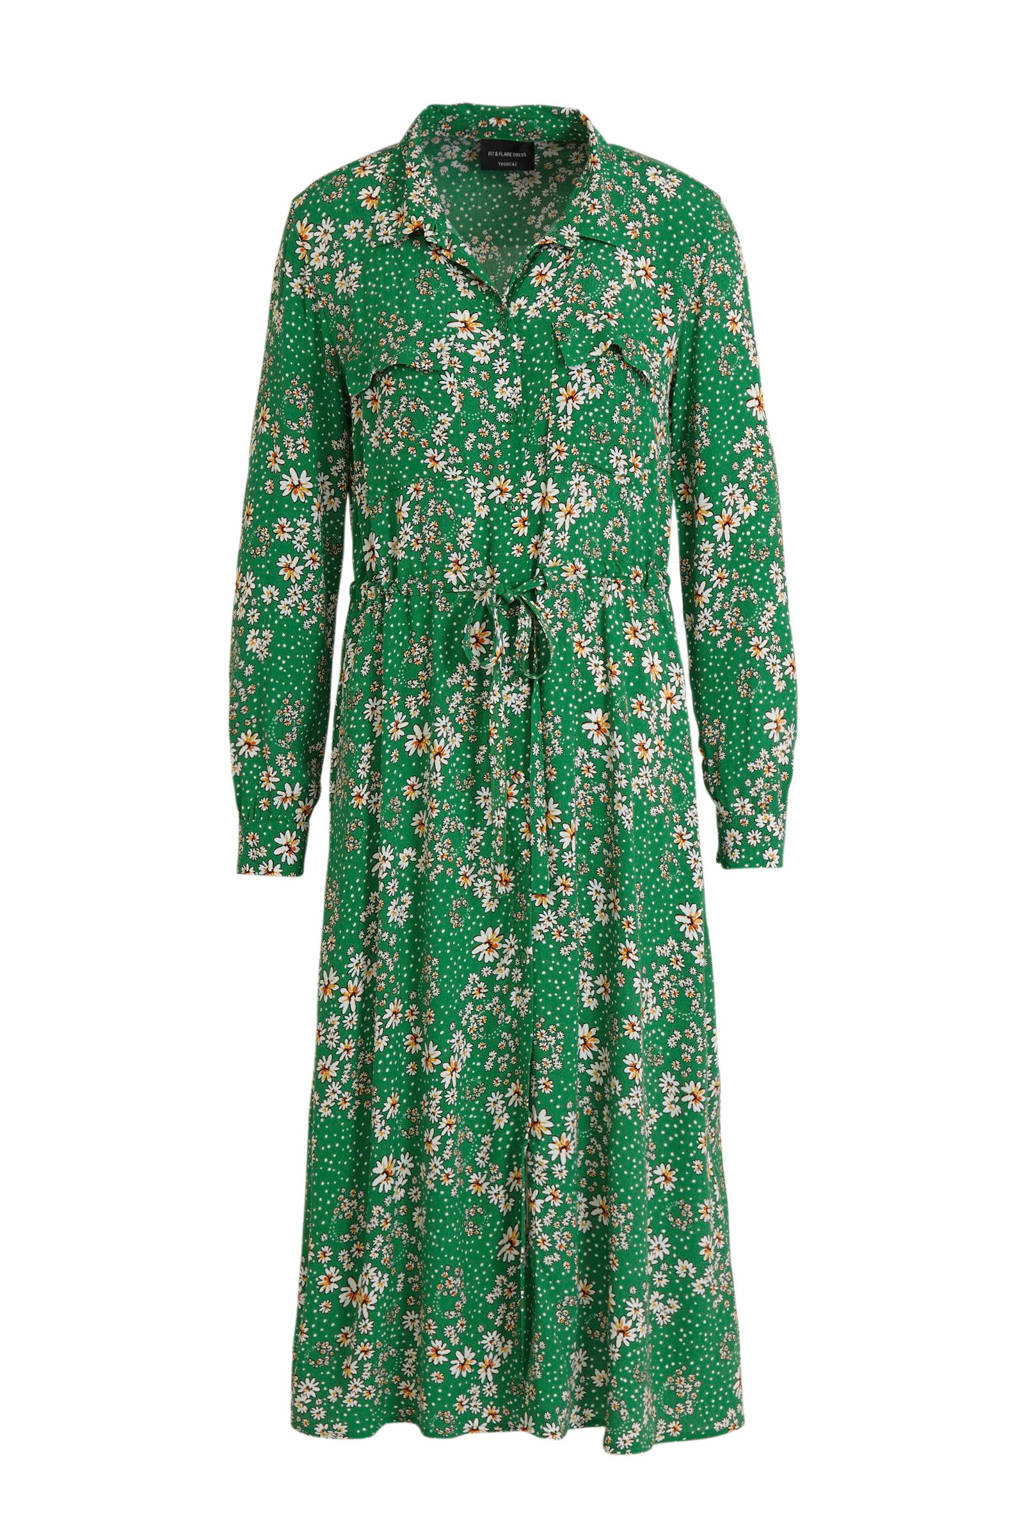 Interessant Portugees Stralend C&A Yessica jurk met all over print groen | wehkamp